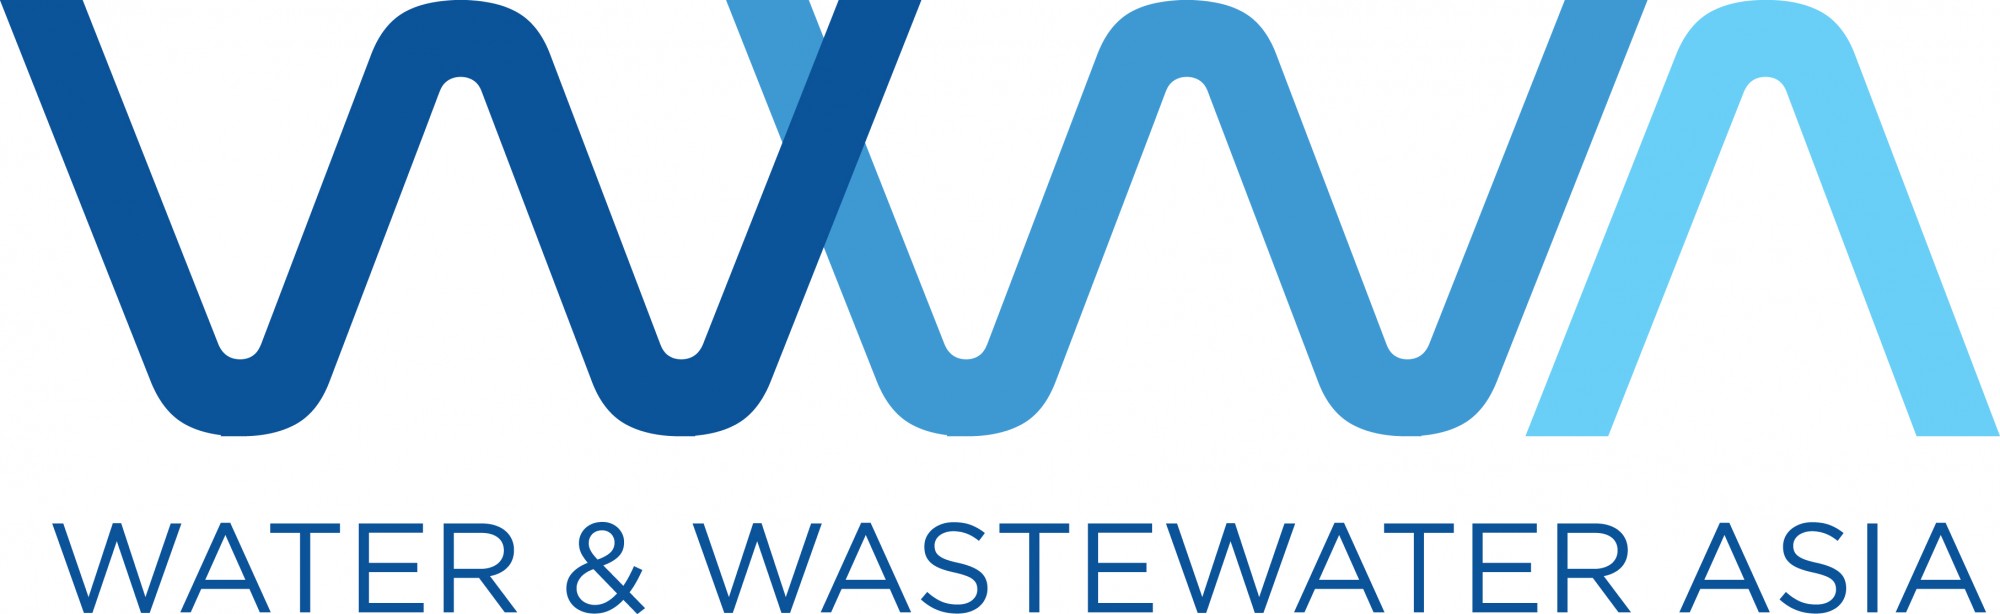 Logo_Water  Wastewater Asia.jpg